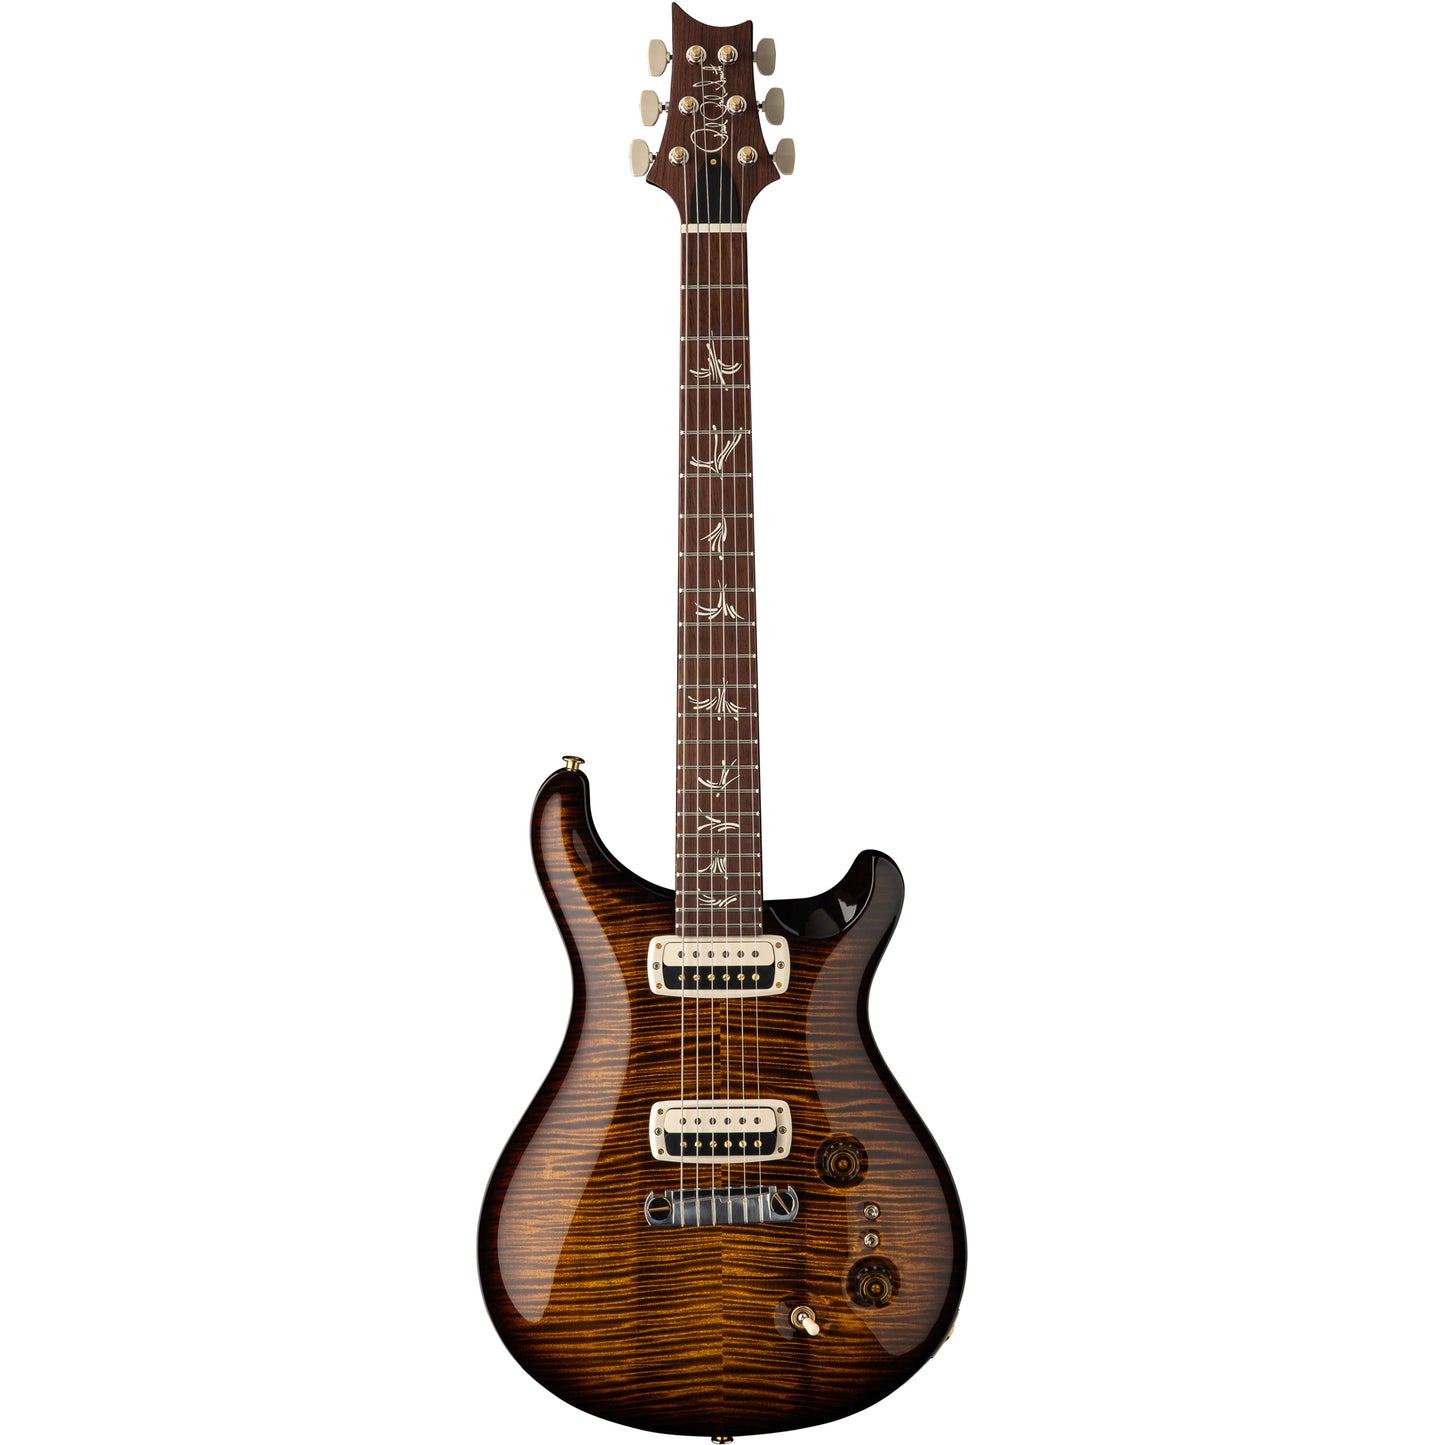 PRS Paul’s Guitar 6 String Electric Guitar - Black Gold Burst, 10 Top